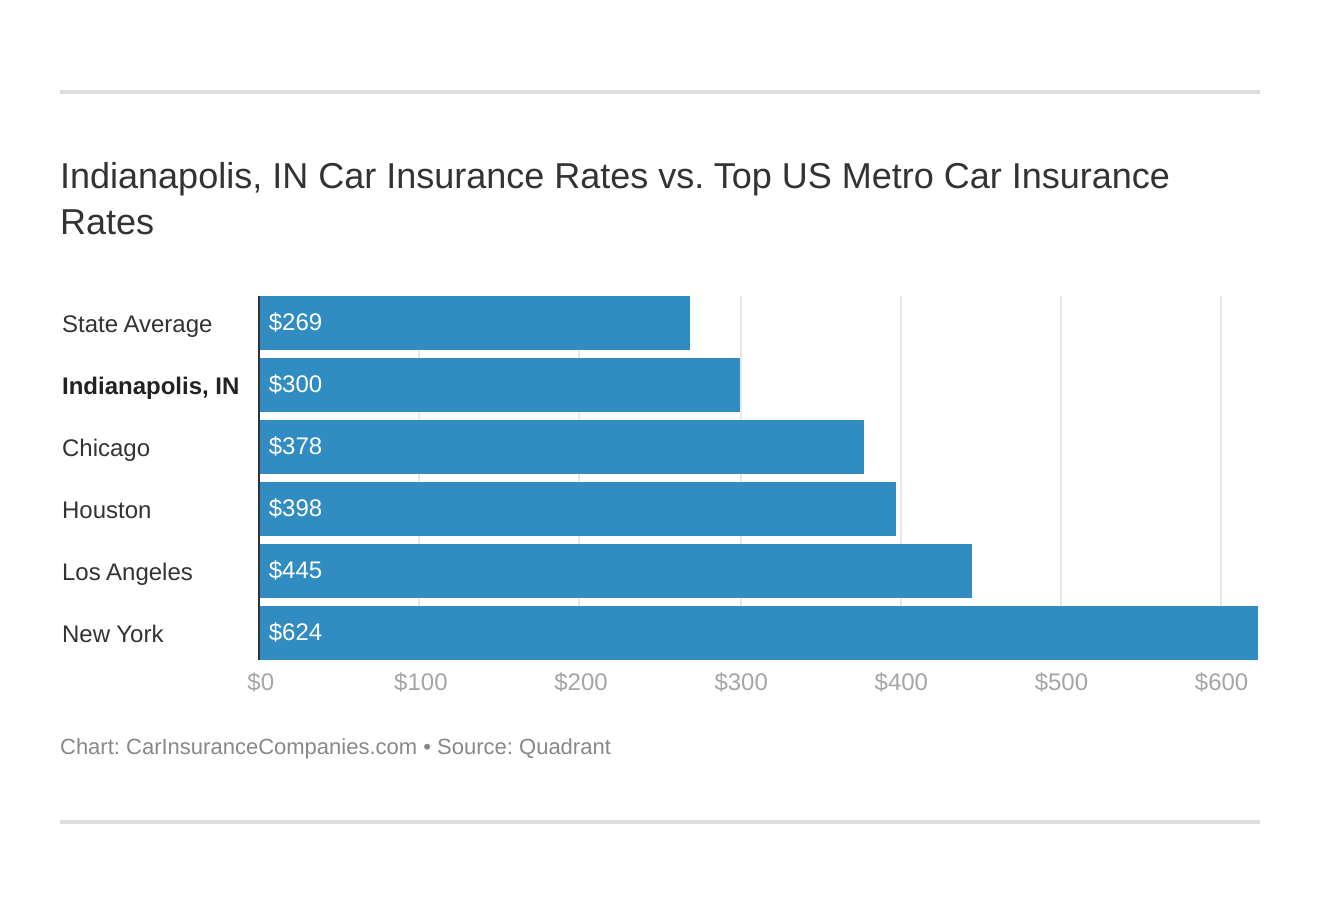 Indianapolis, IN Car Insurance Rates vs. Top US Metro Car Insurance Rates